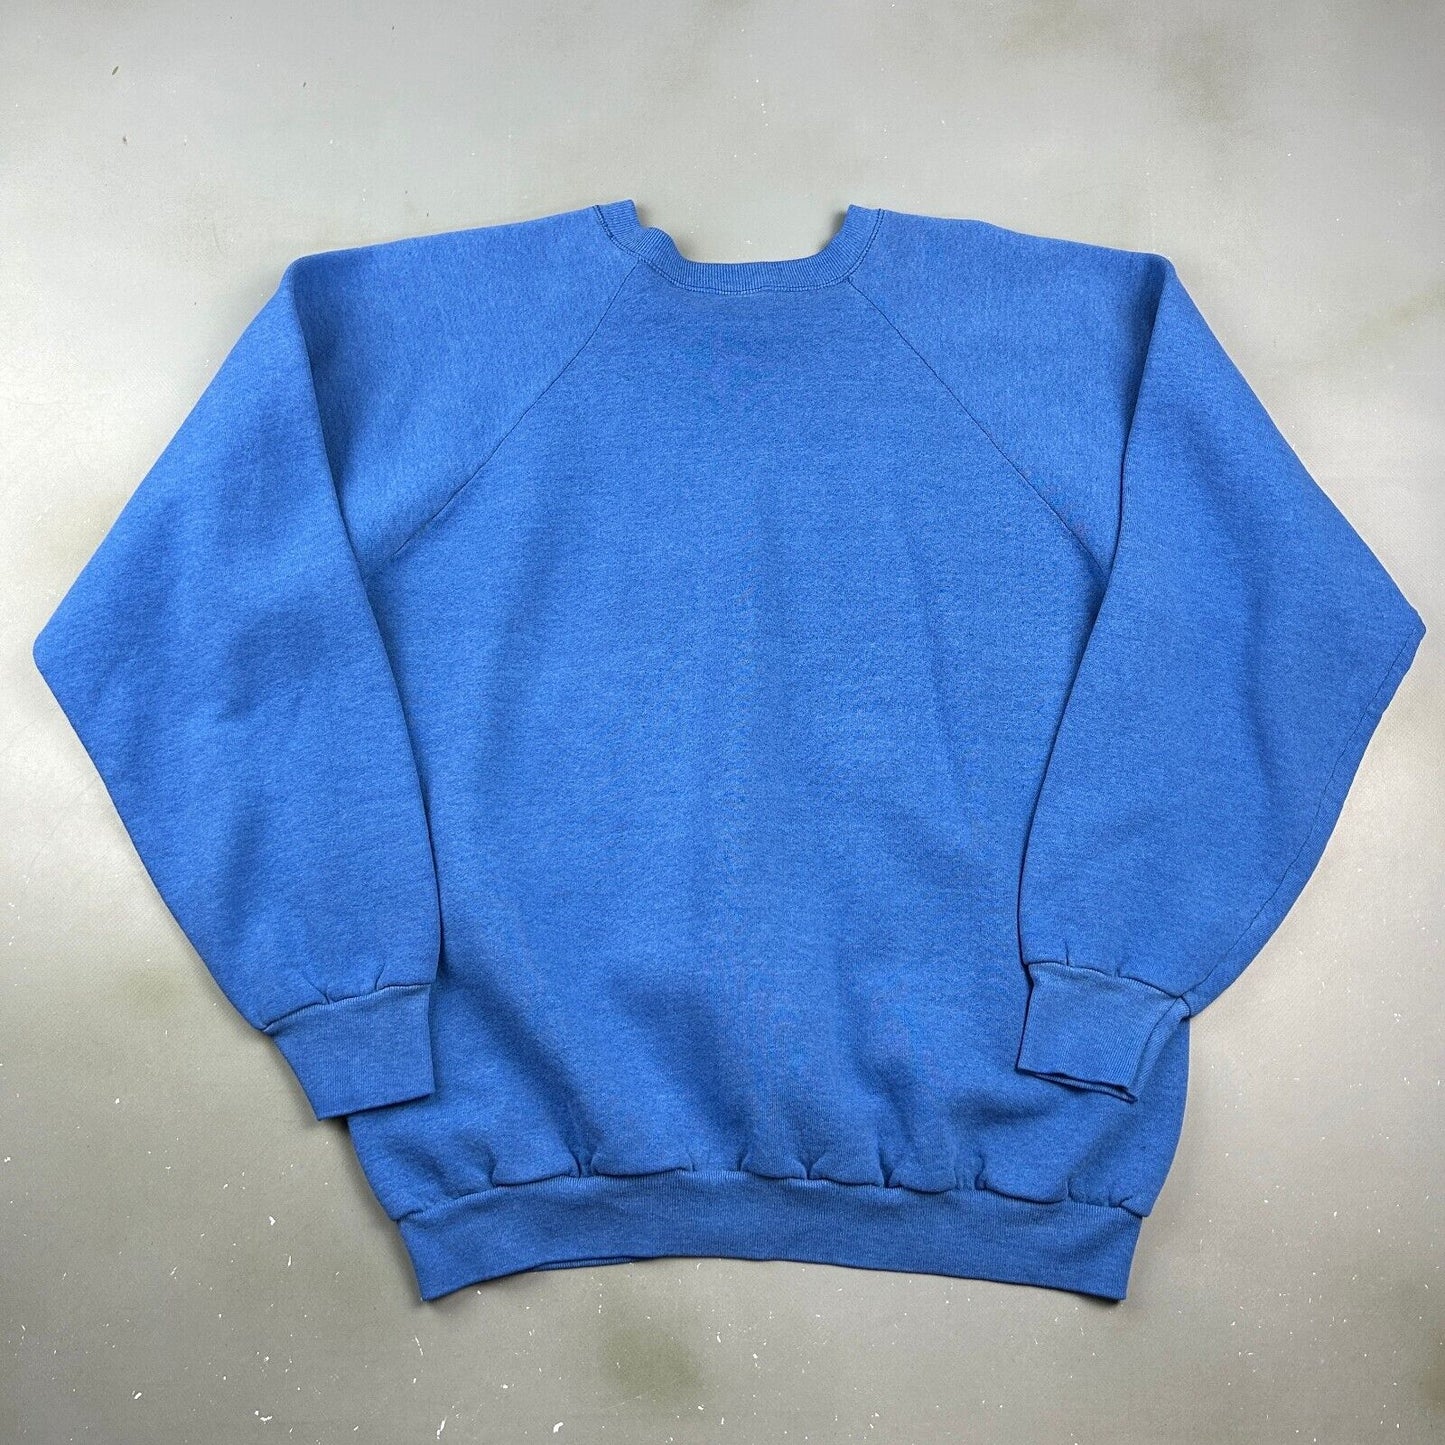 VINTAGE 90s | NASHVILLE Big City Lights Blue Crewneck Sweater sz L Adult